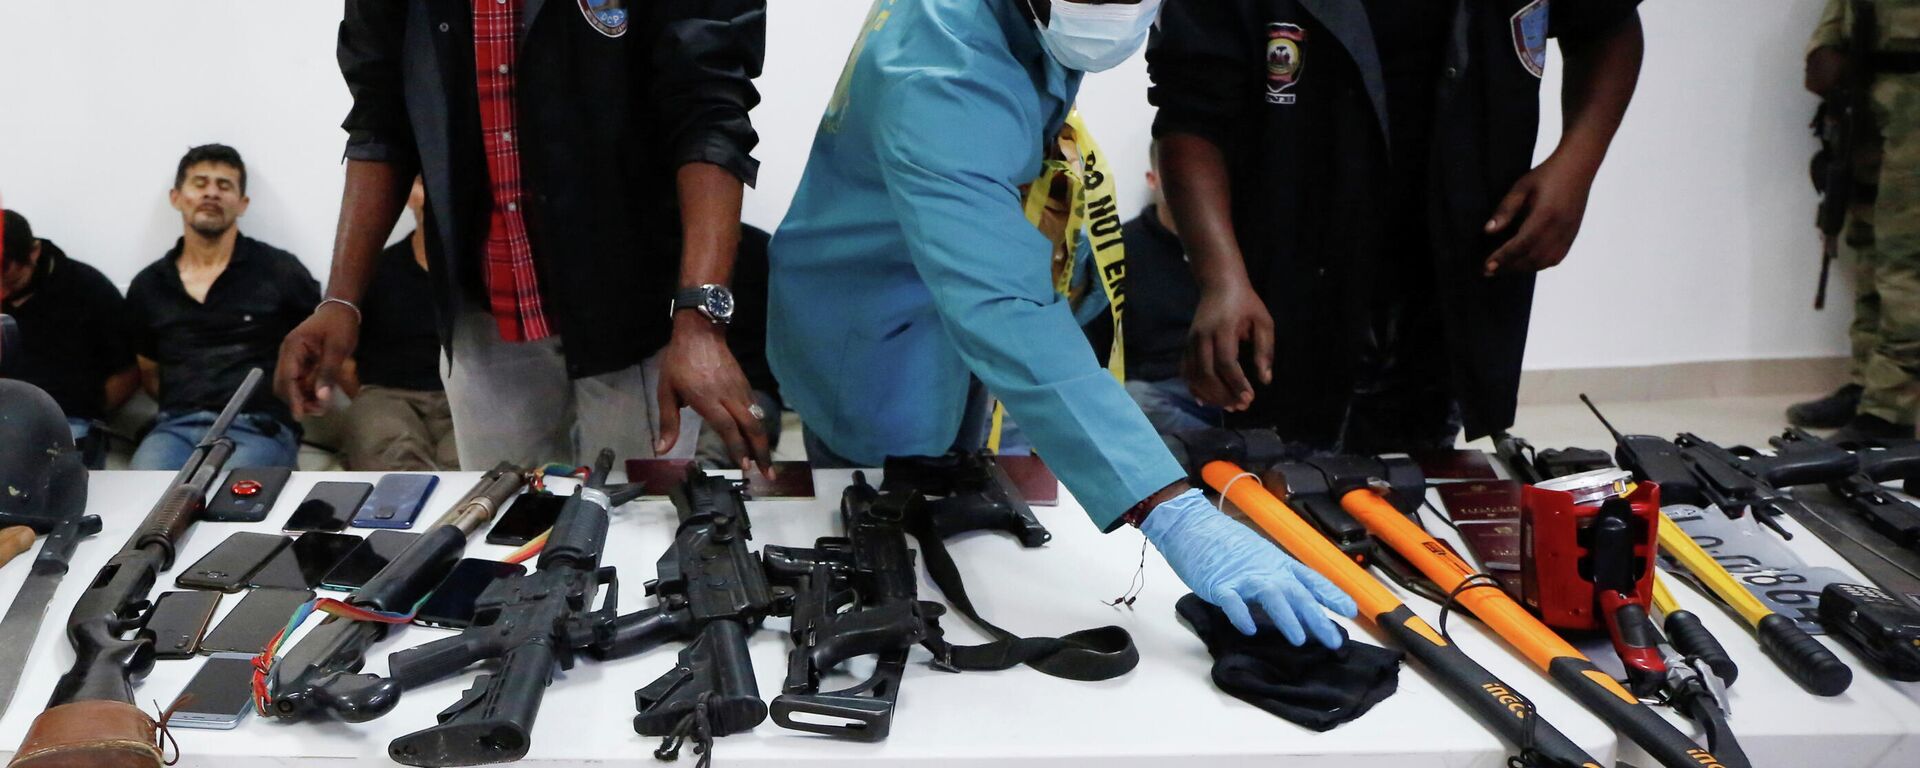 Armas del comando que asesinó al presidente de Haití - Sputnik Mundo, 1920, 09.07.2021